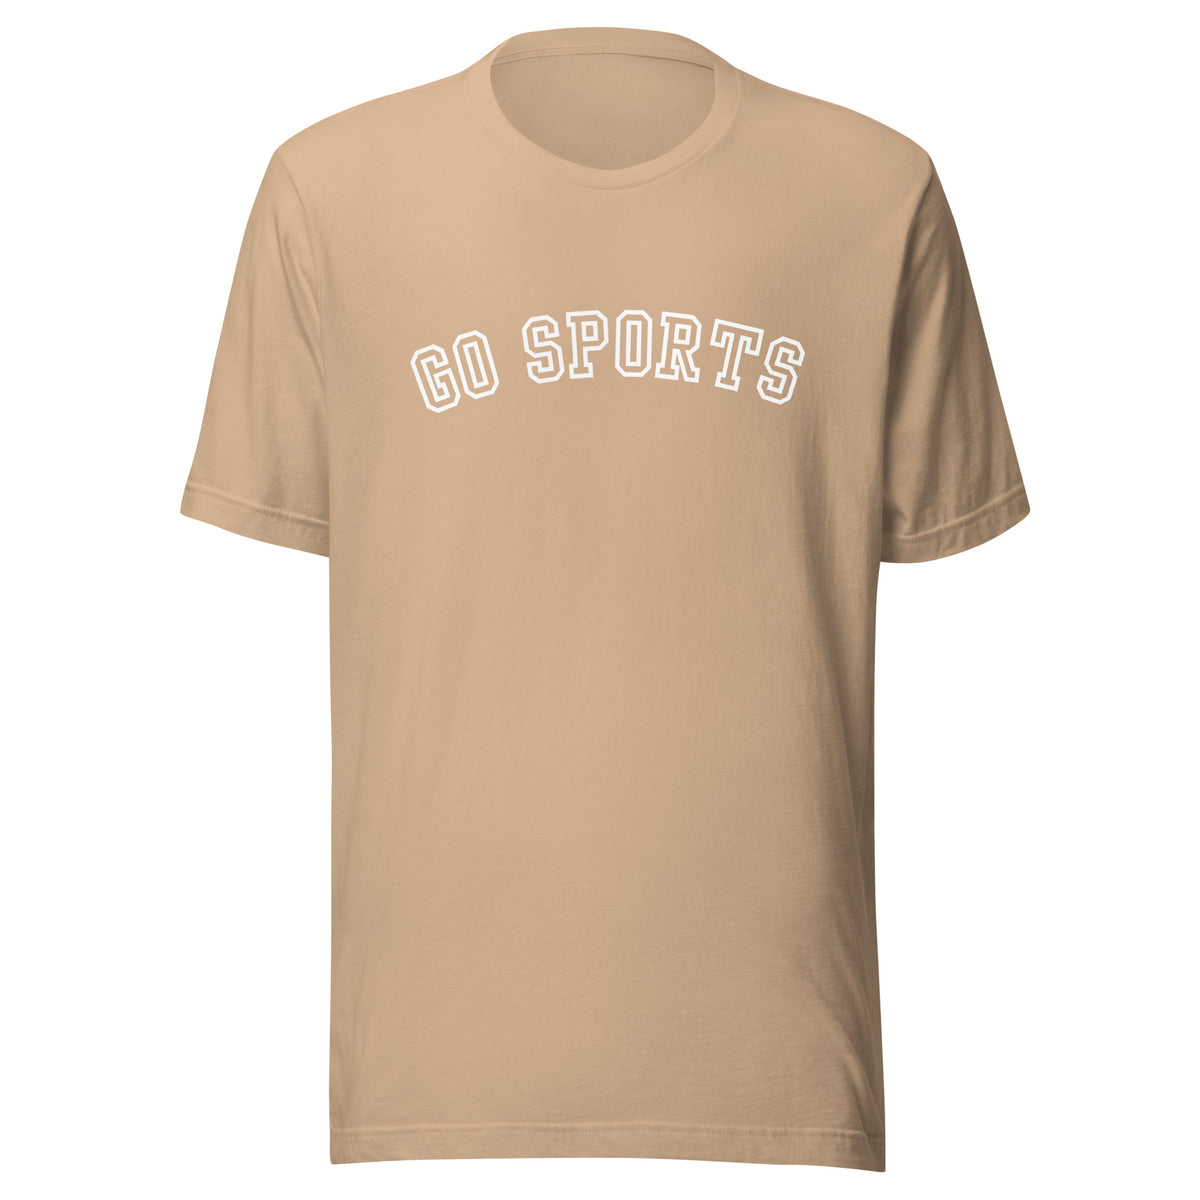 Go Sports (White Writing) t-shirt